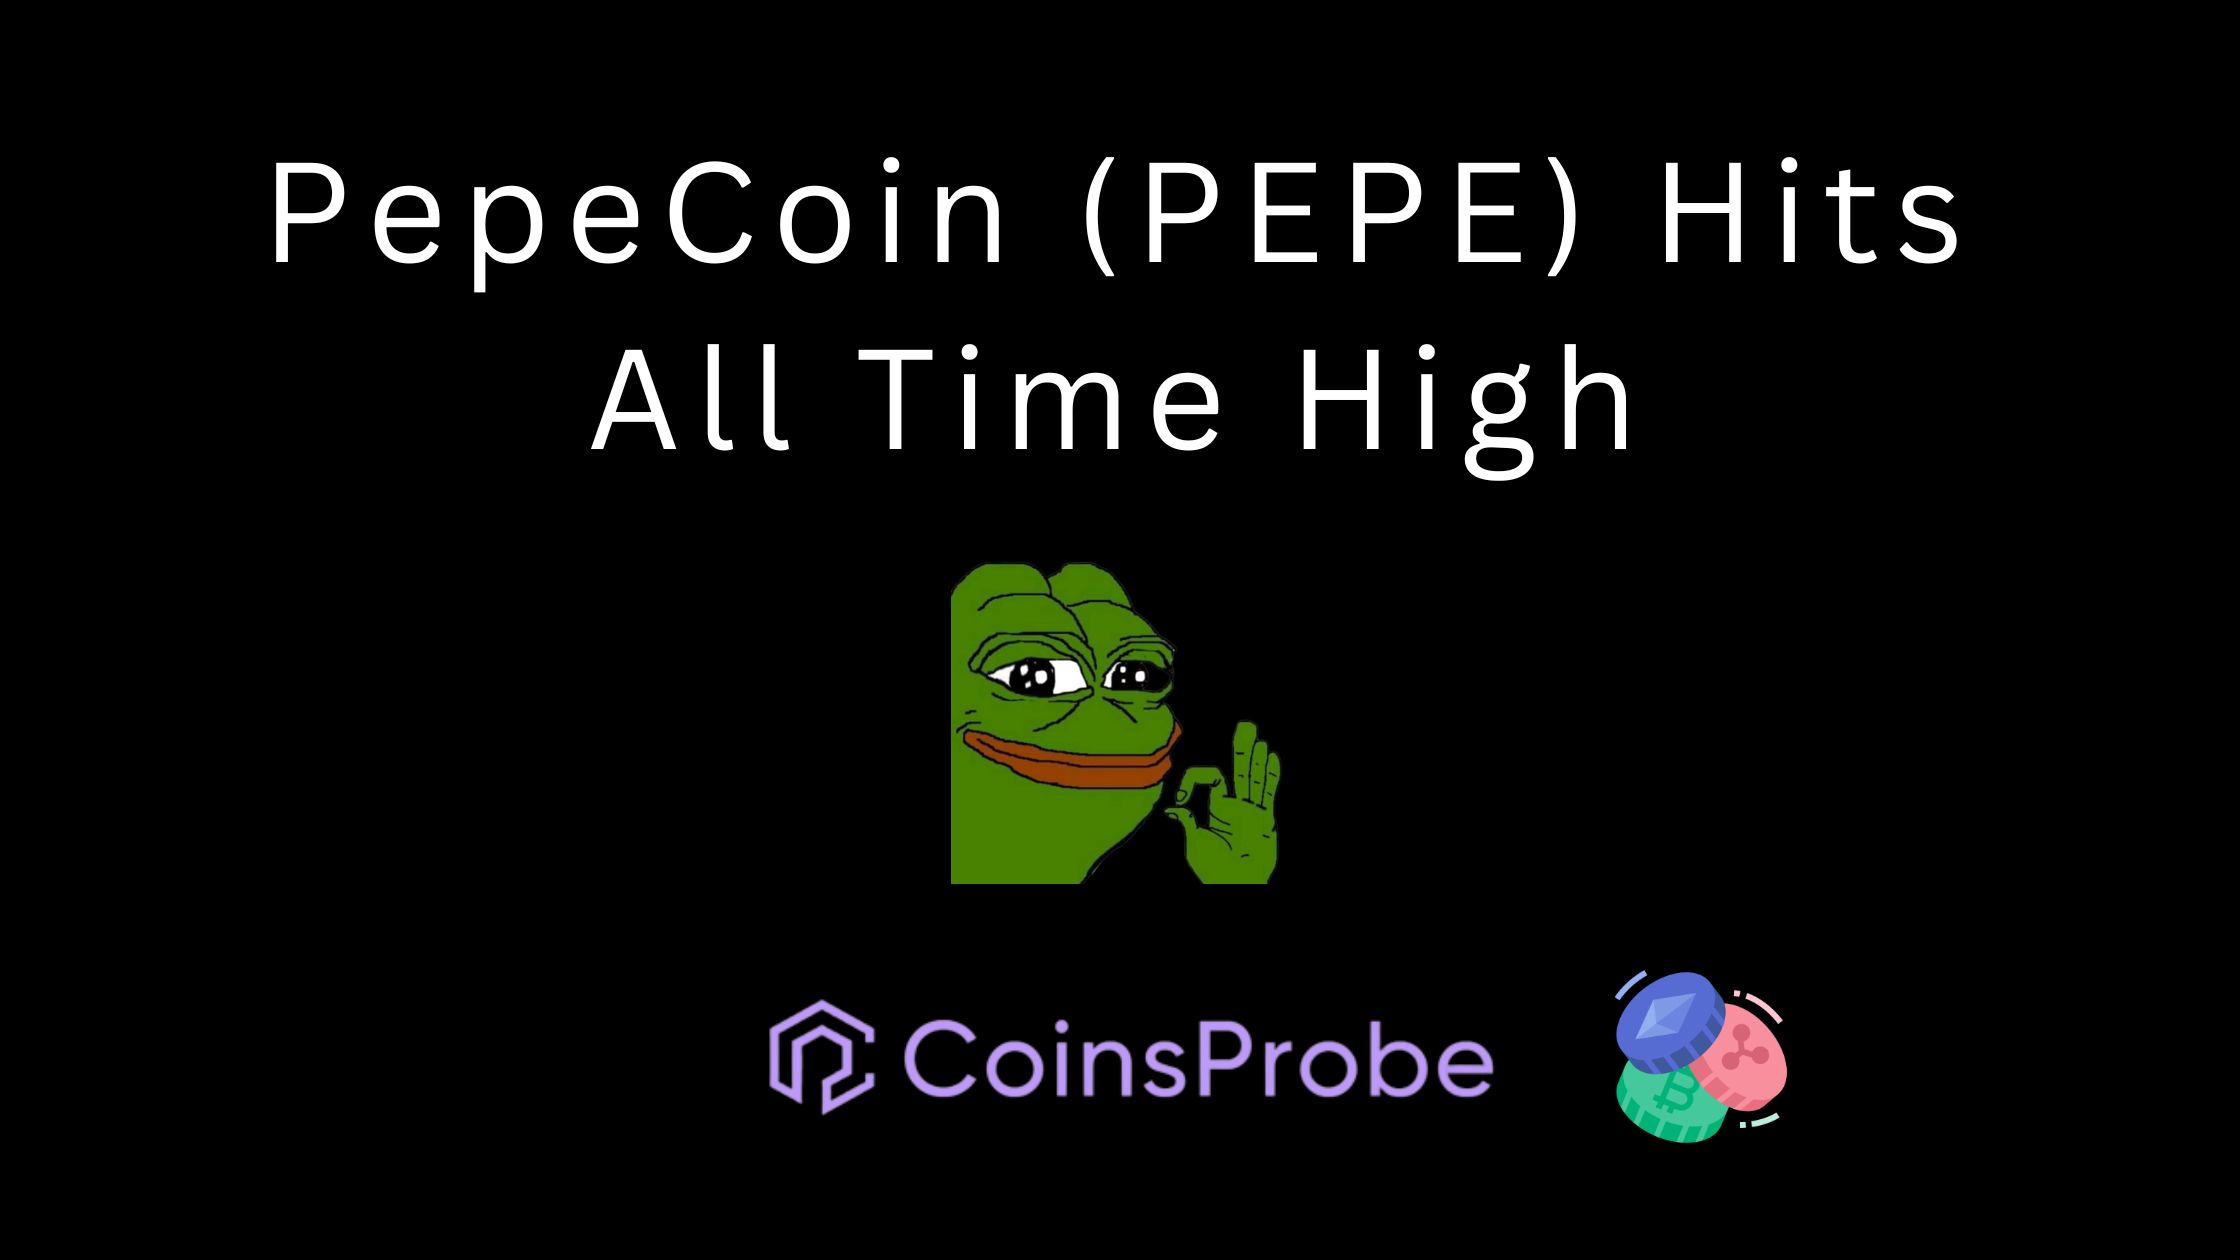 PepeCoin (PEPE) Hits All Time High